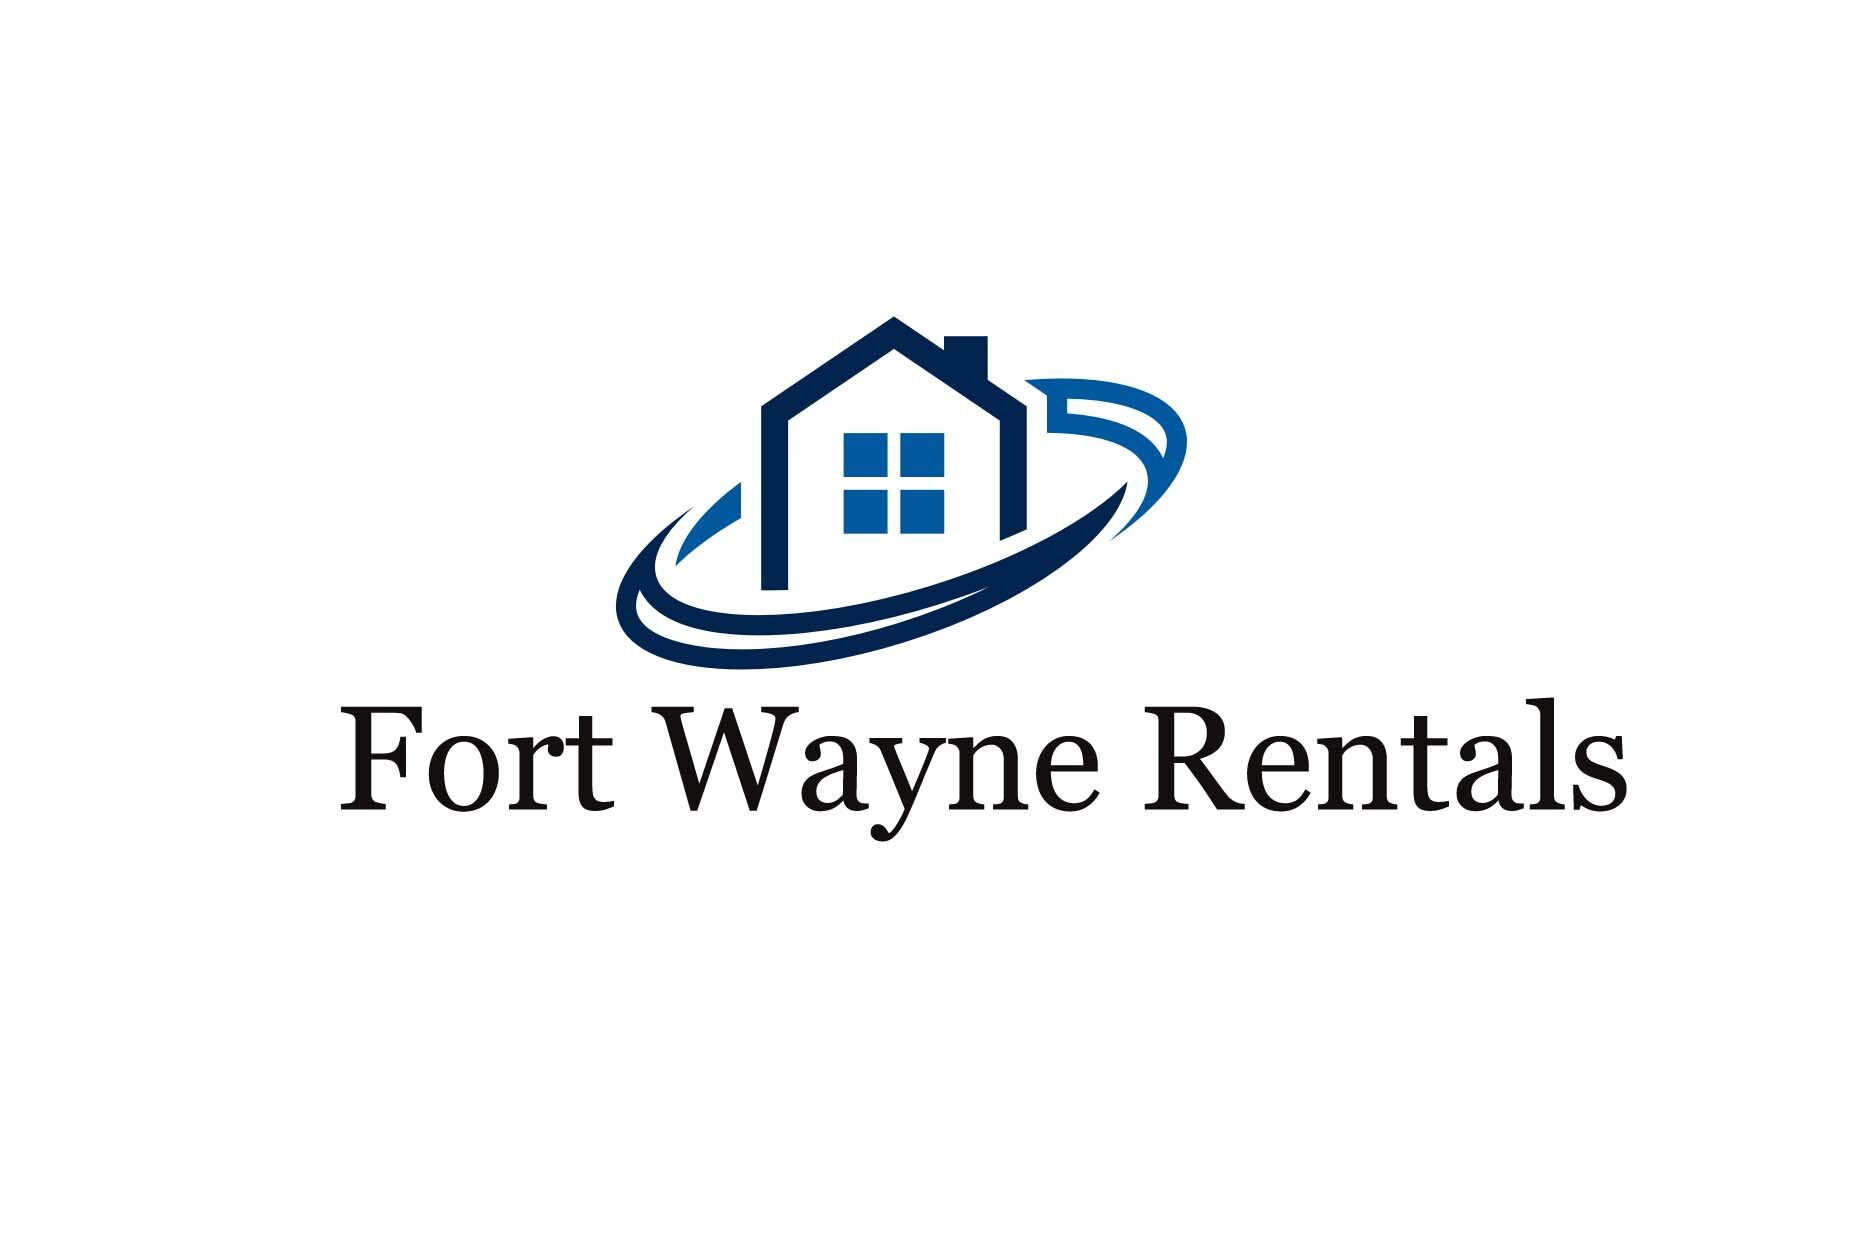 Fort Wayne Rentals